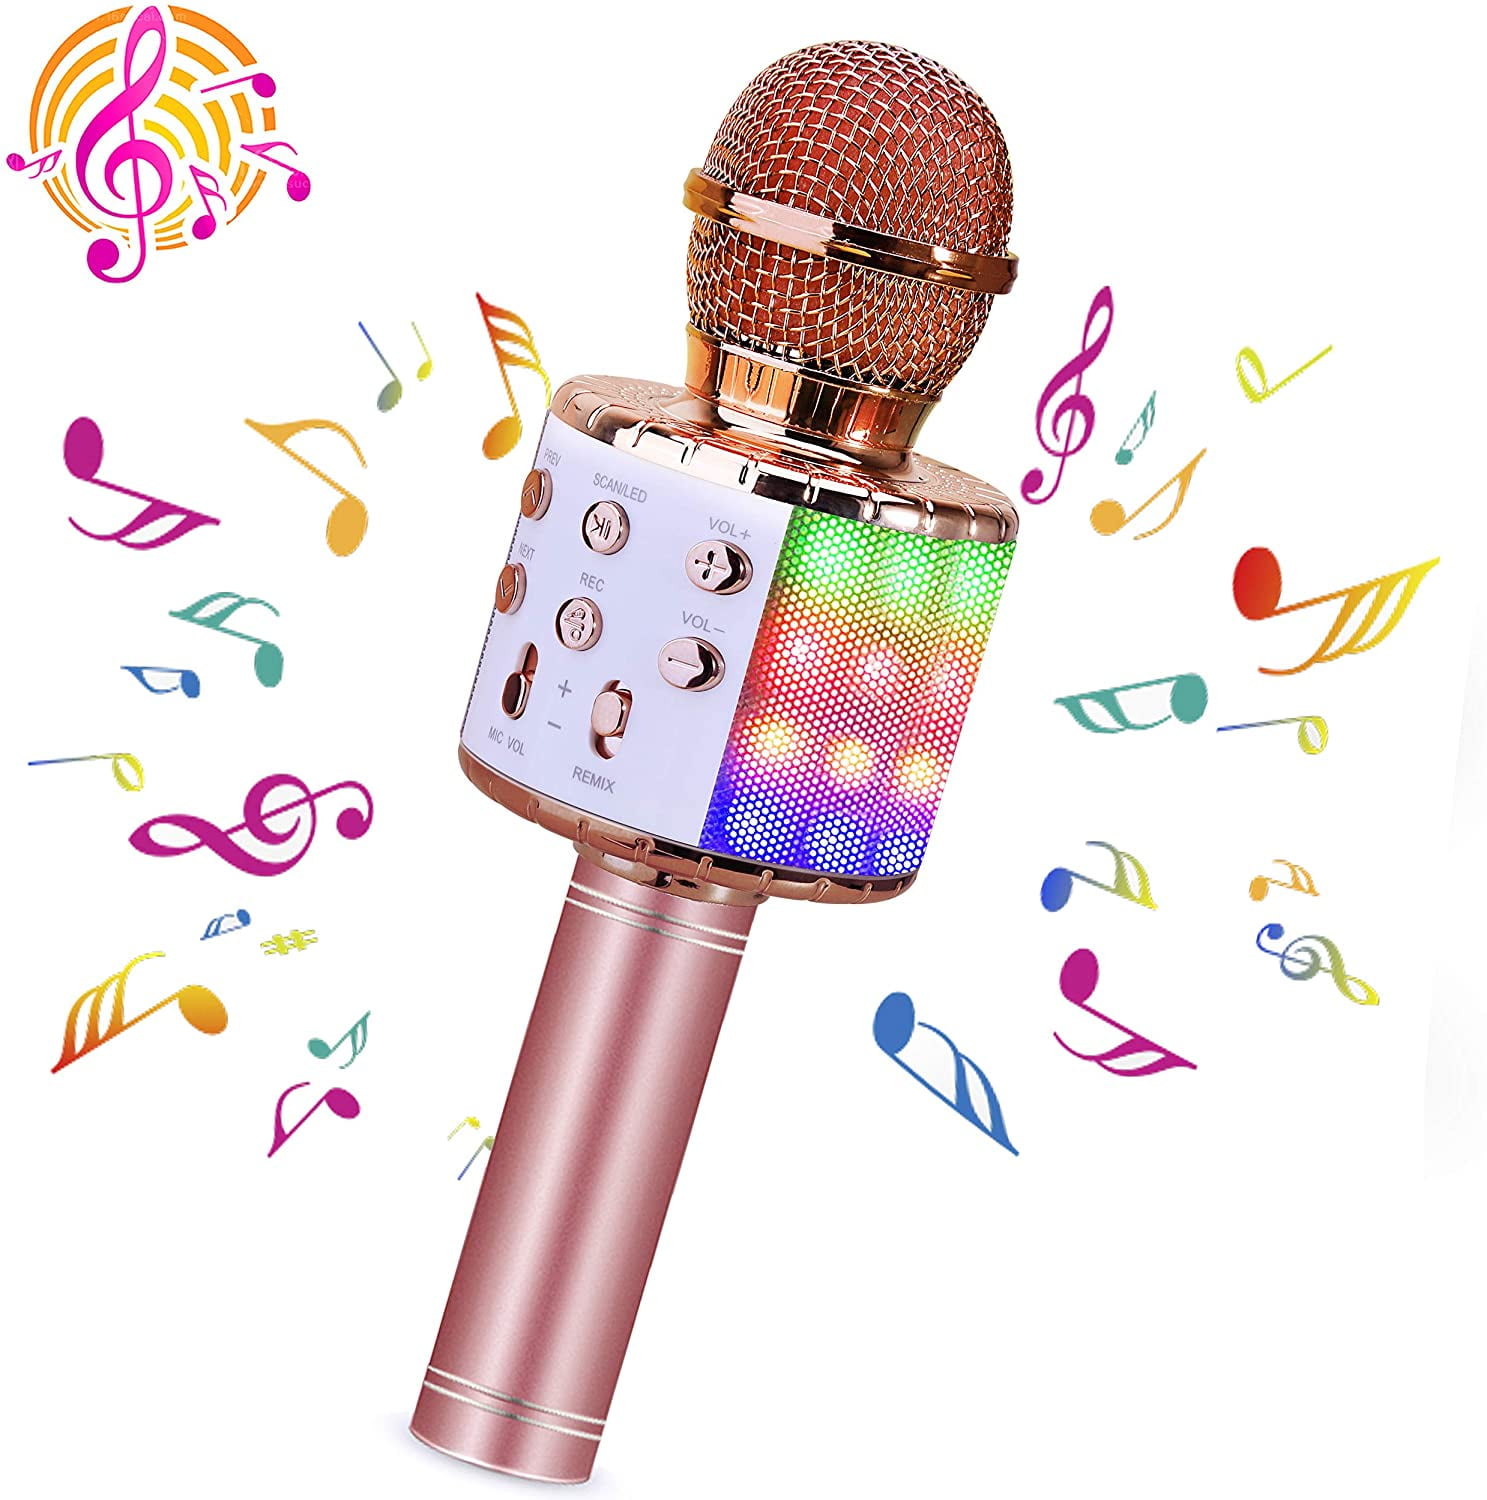 Black MARSPOWER Wireless Karaoke Microphone Wireless Handheld Portable Speaker Home KTV Player Singing Support Record TF Play Microphone